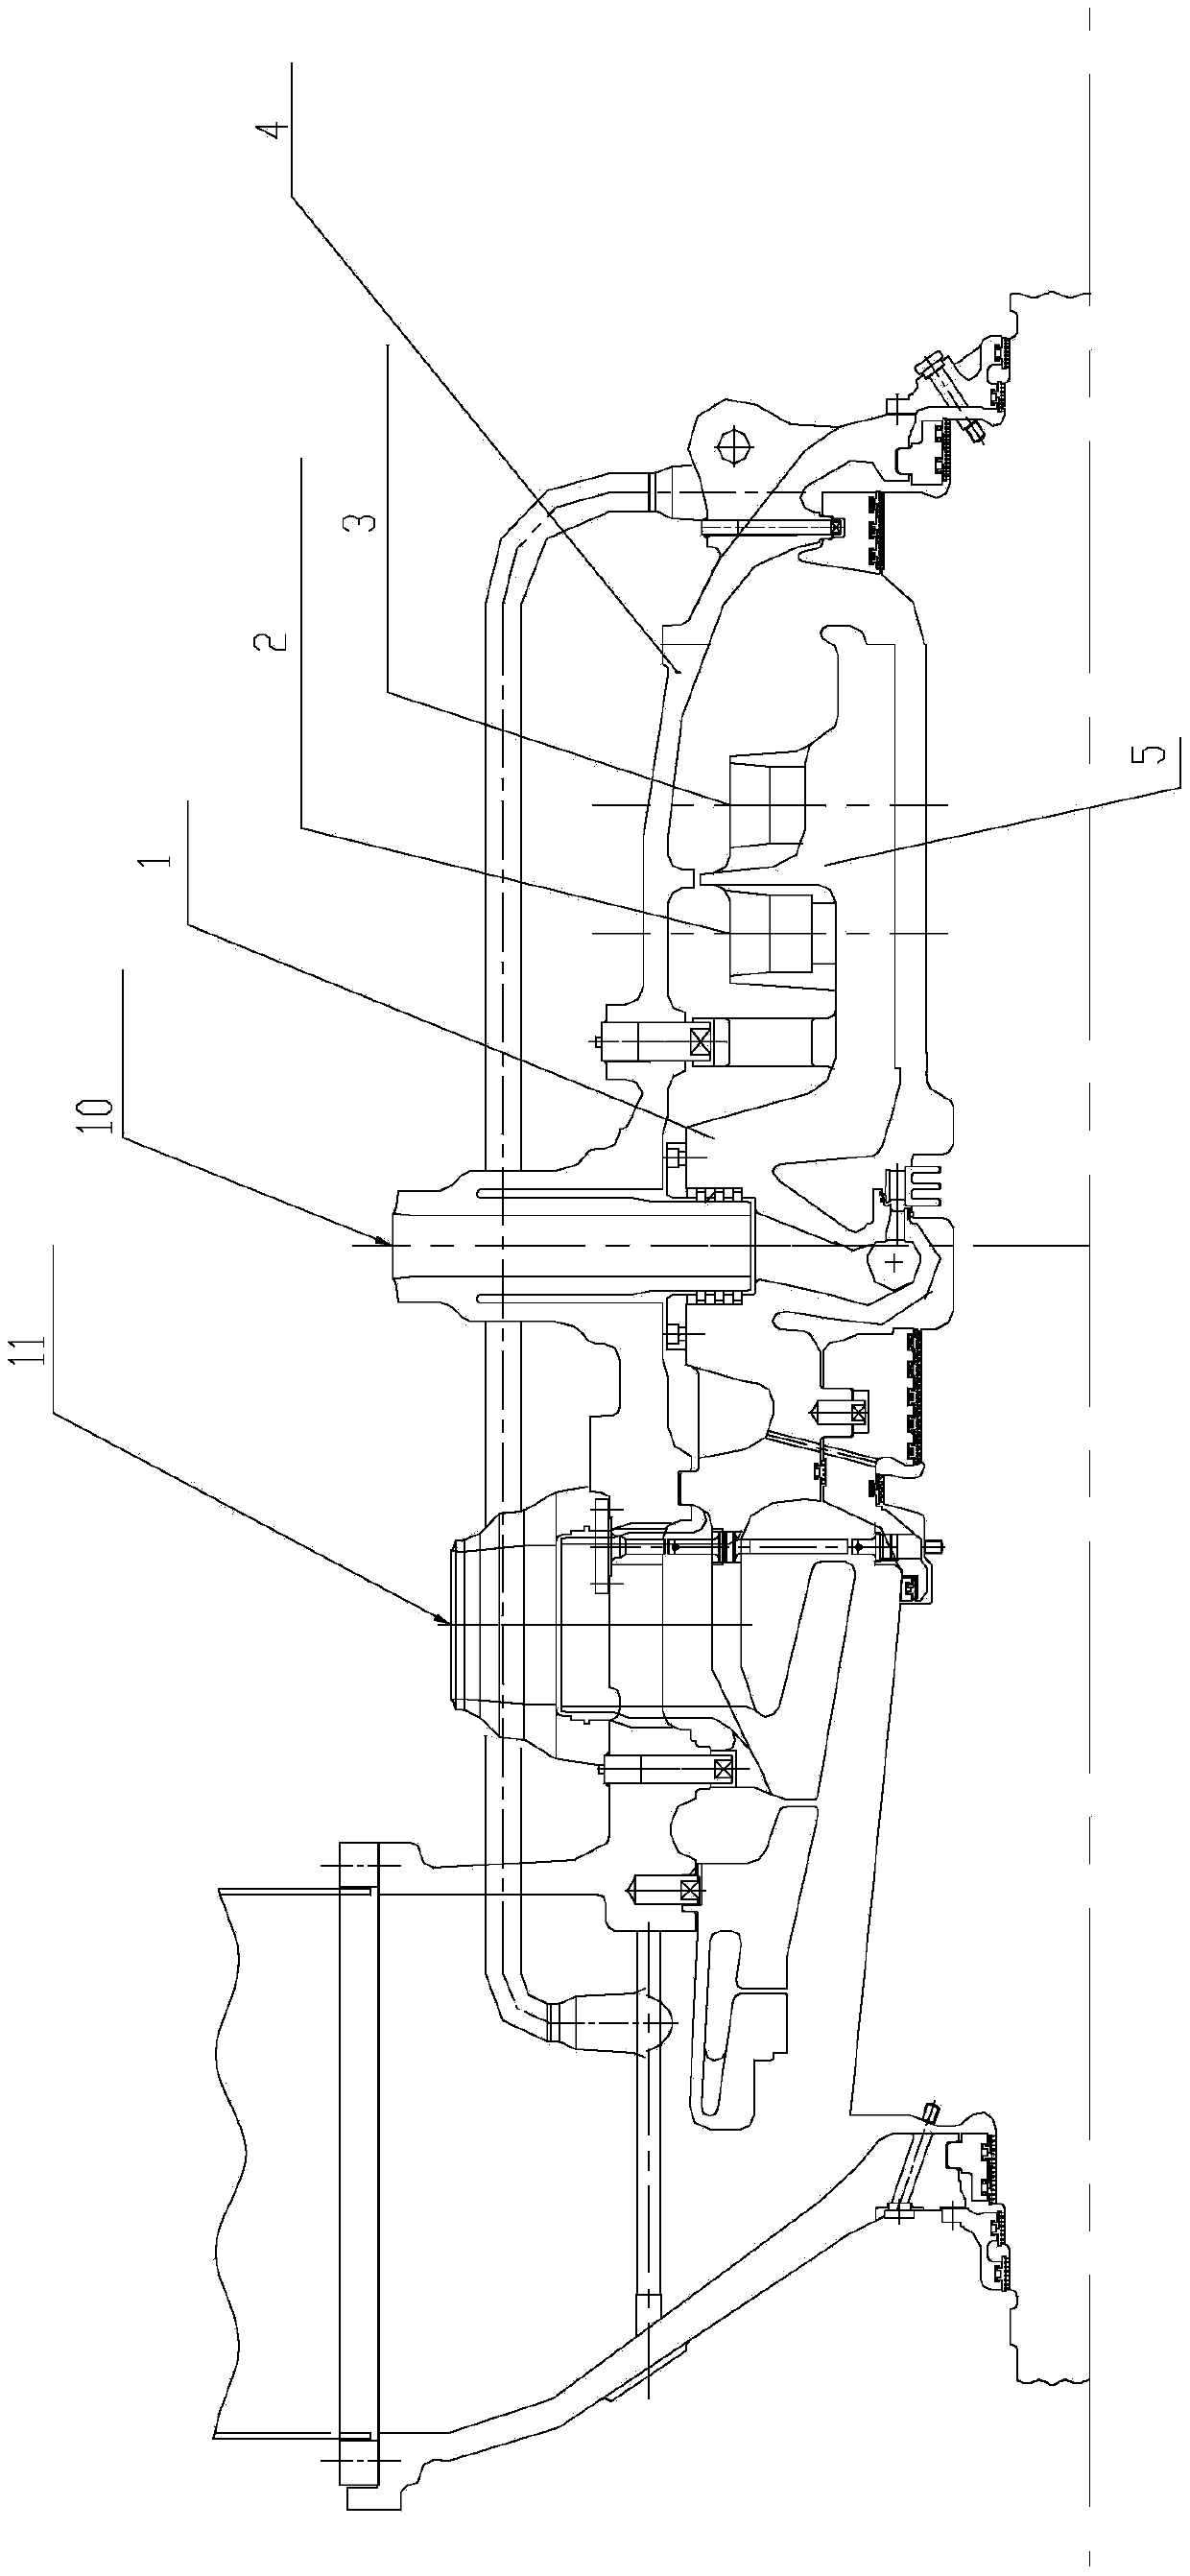 Novel integrated high-medium-pressure internal cylinder applied to supercritical steam turbine